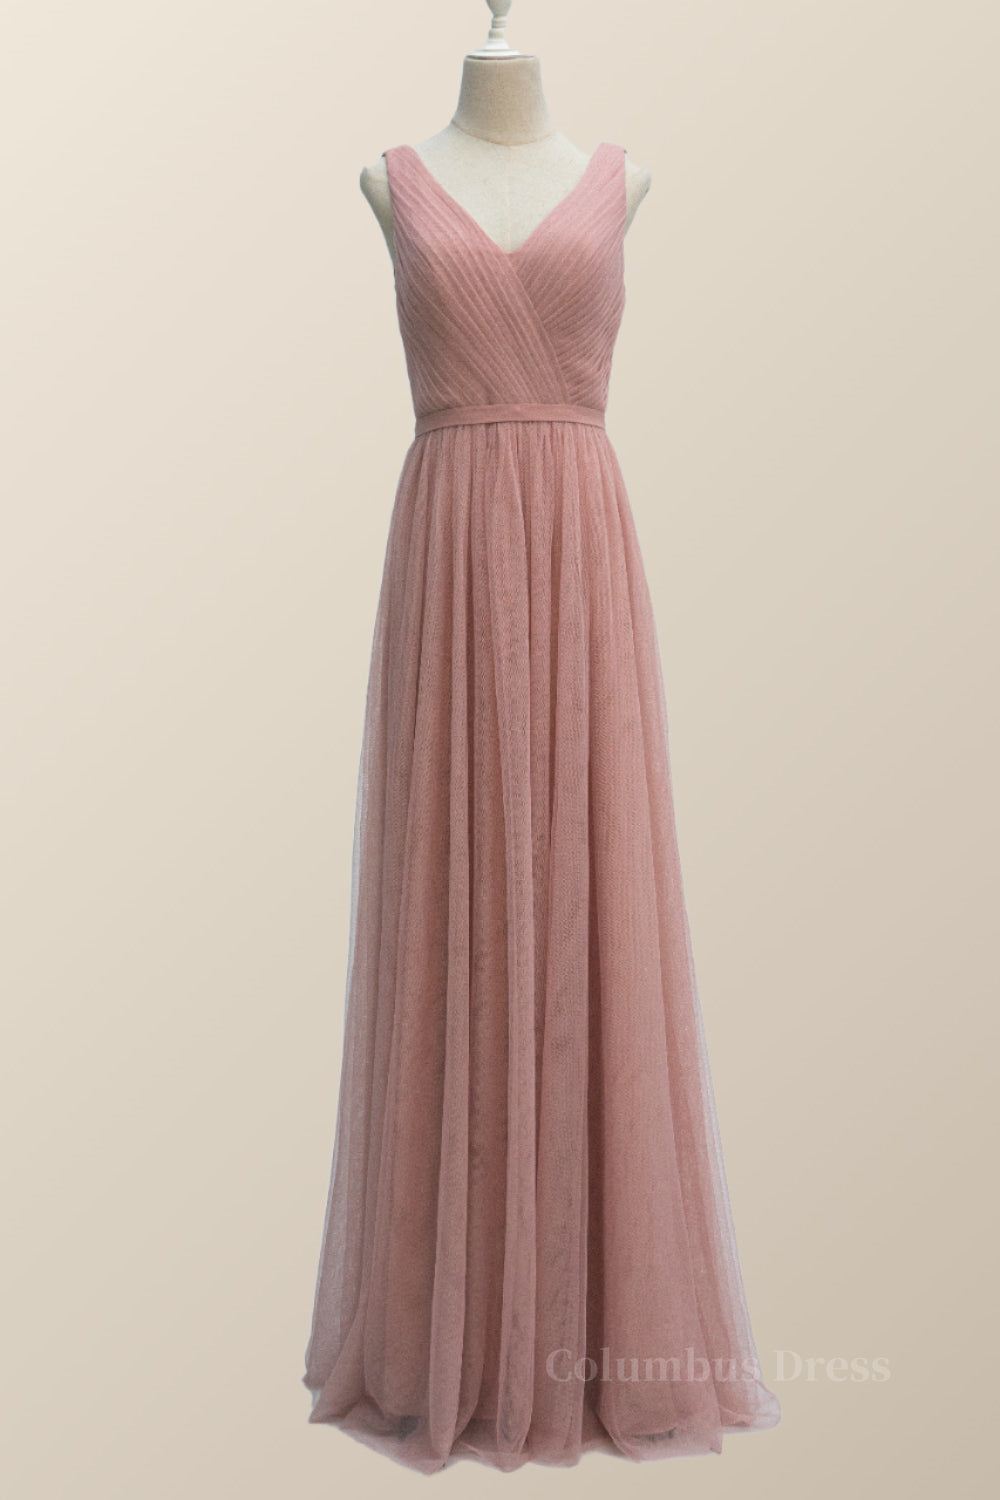 Fantasy Dress, V Neck Plush Pink Tulle Long Bridesmaid Dress